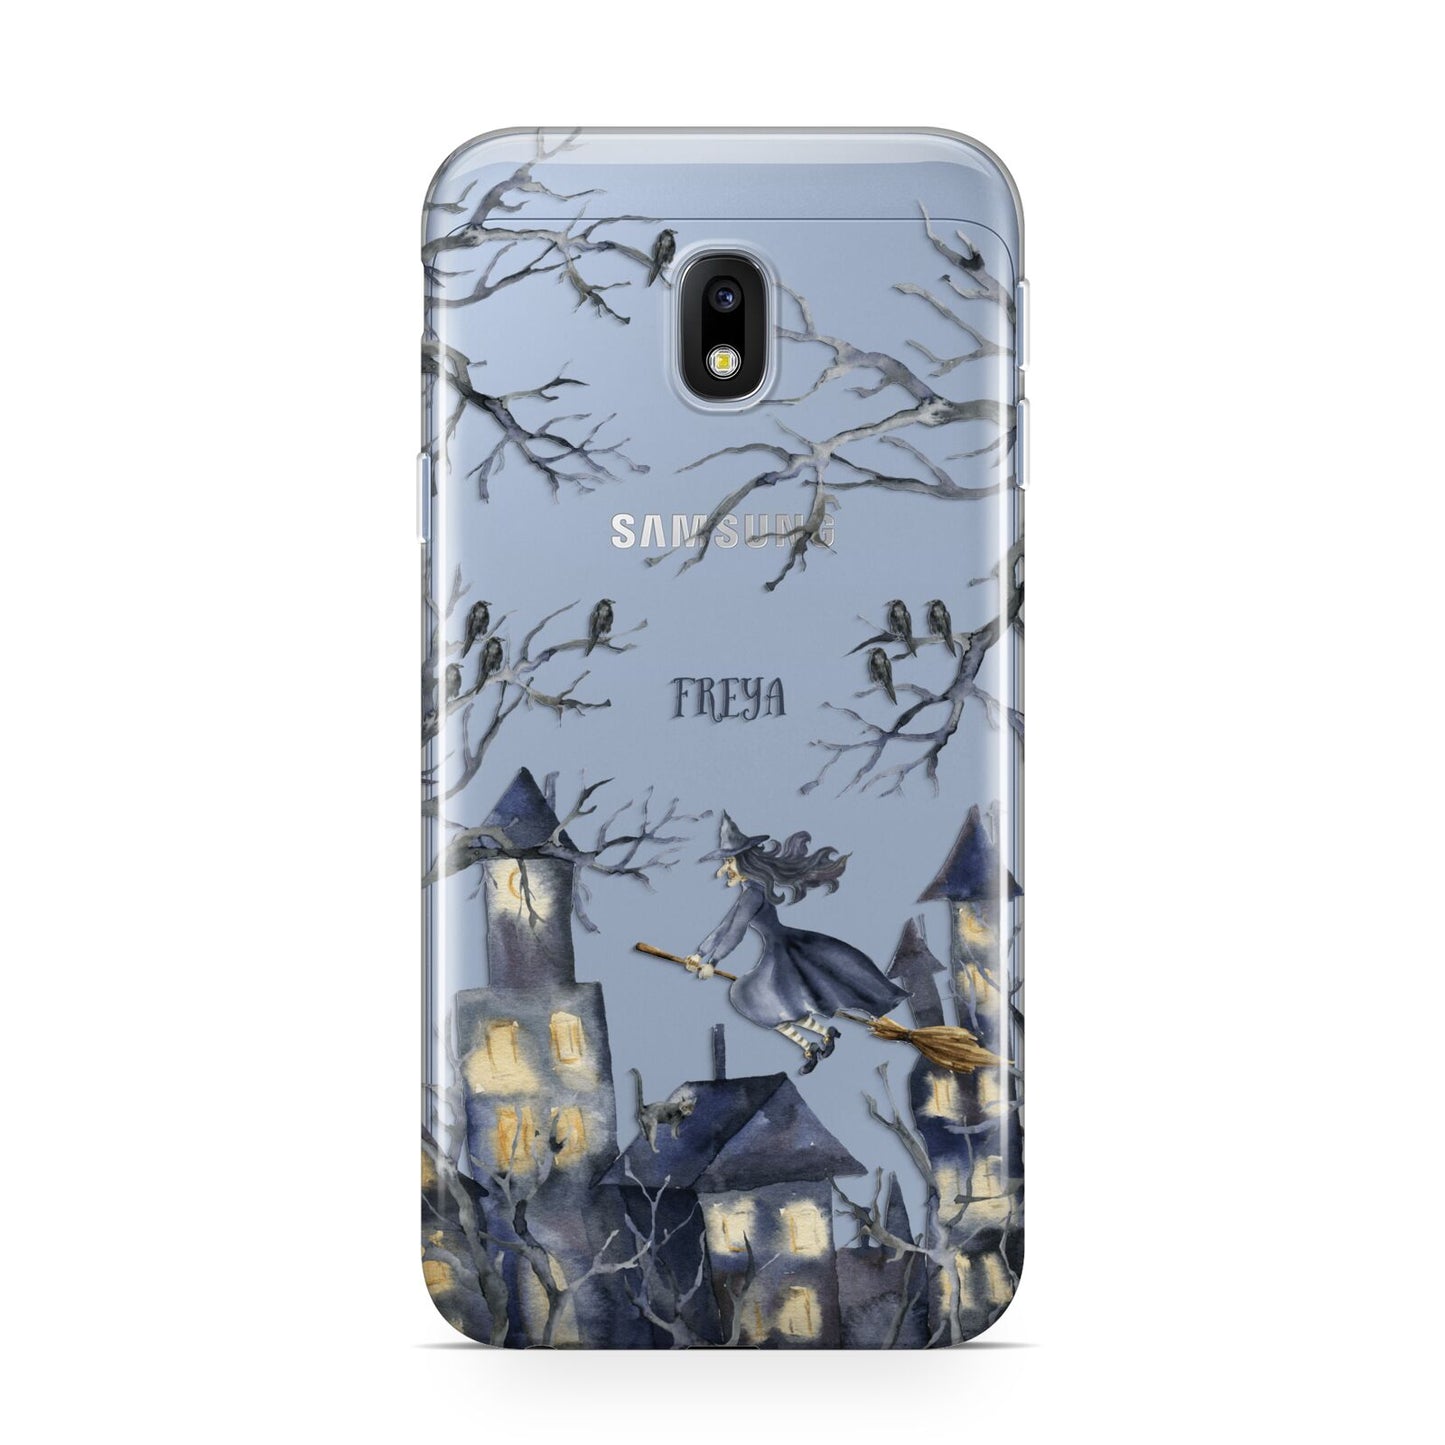 Treetop Halloween Witch Samsung Galaxy J3 2017 Case